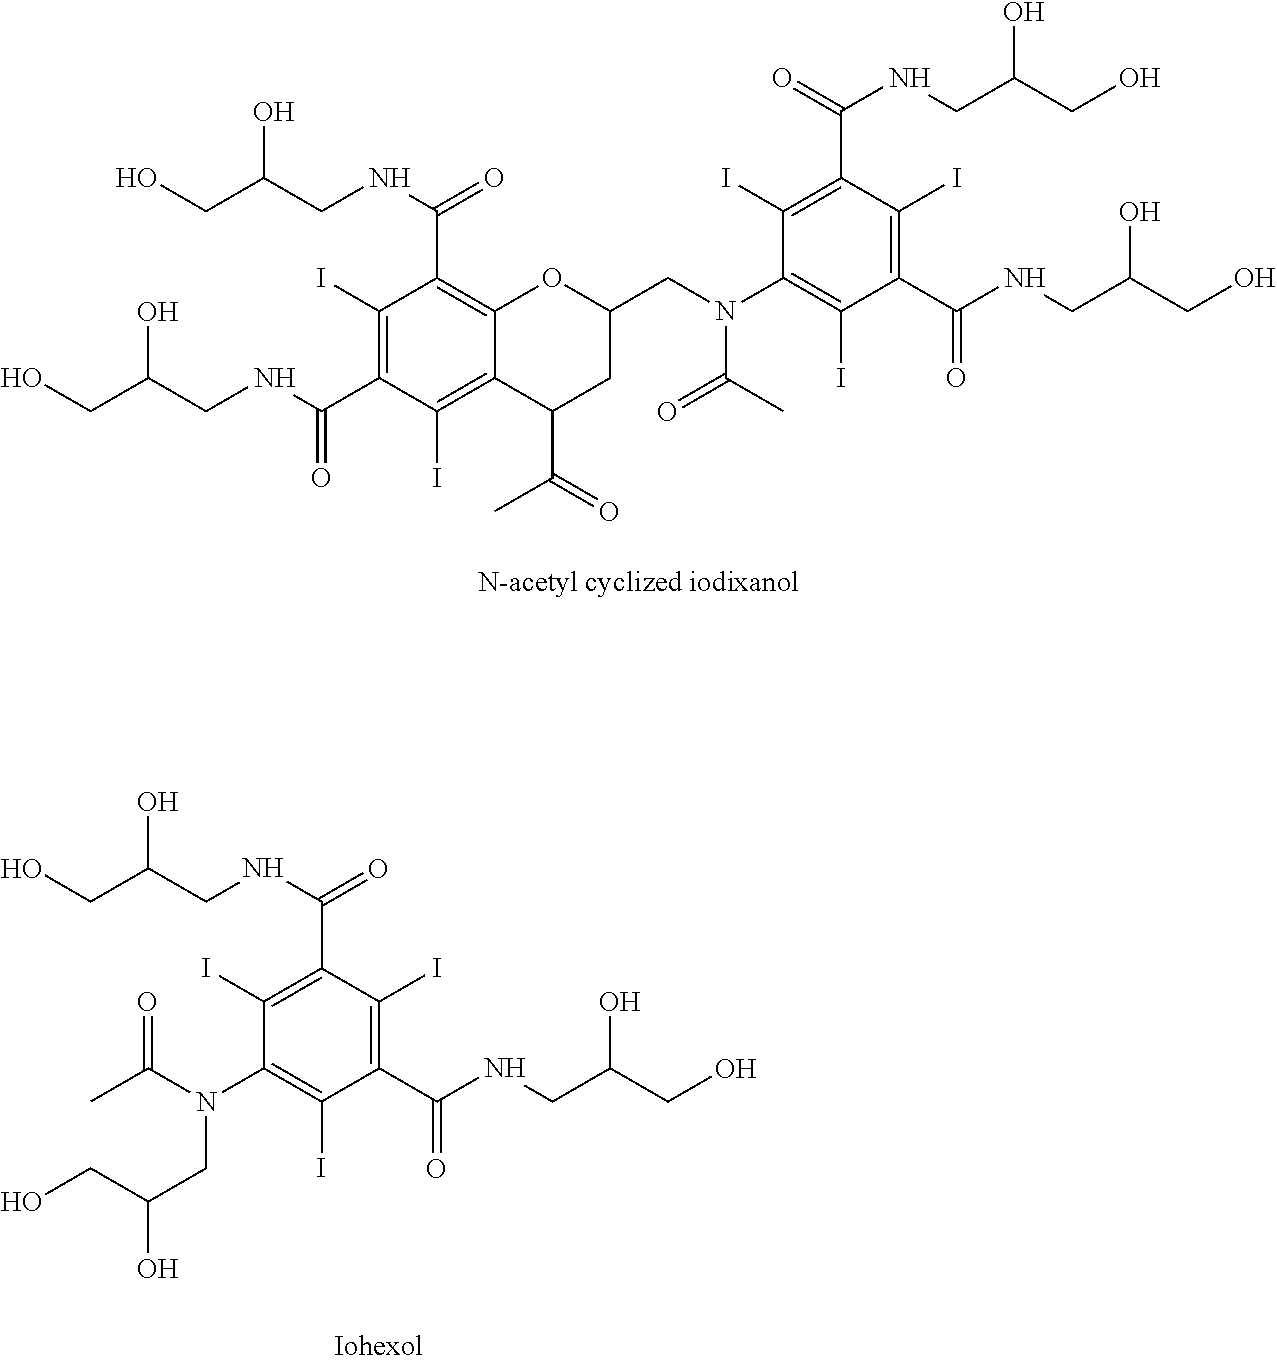 Sytnhesis of iodixanol in propyleneglycol